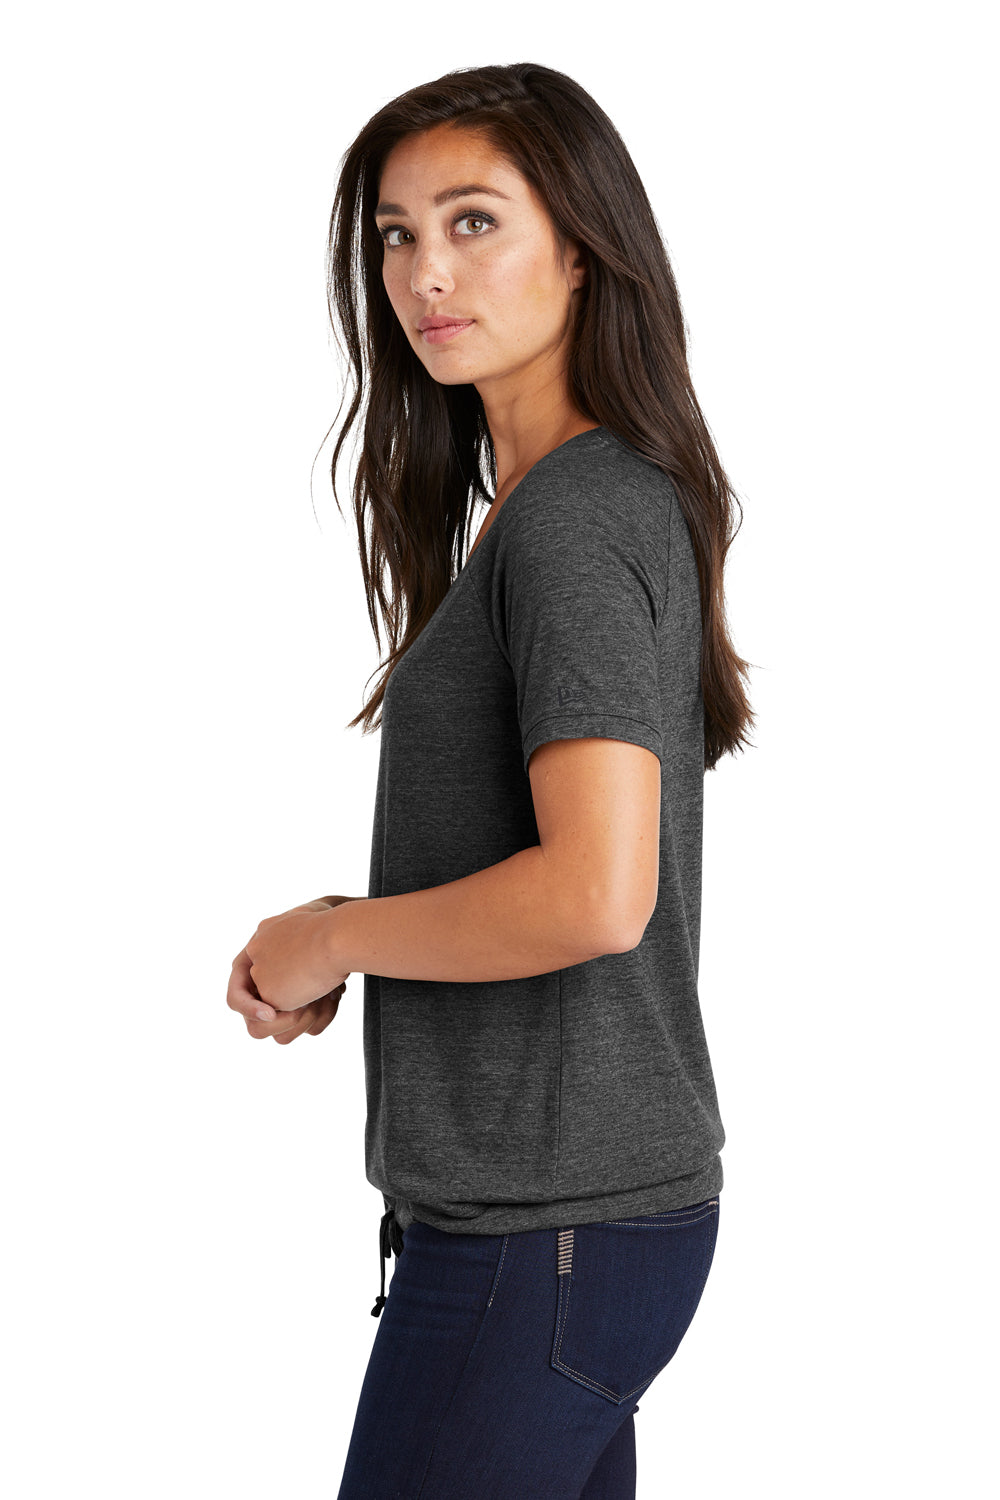 New Era LNEA133 Womens Performance Cinch Moisture Wicking Short Sleeve Wide Neck T-Shirt Graphite Grey Side